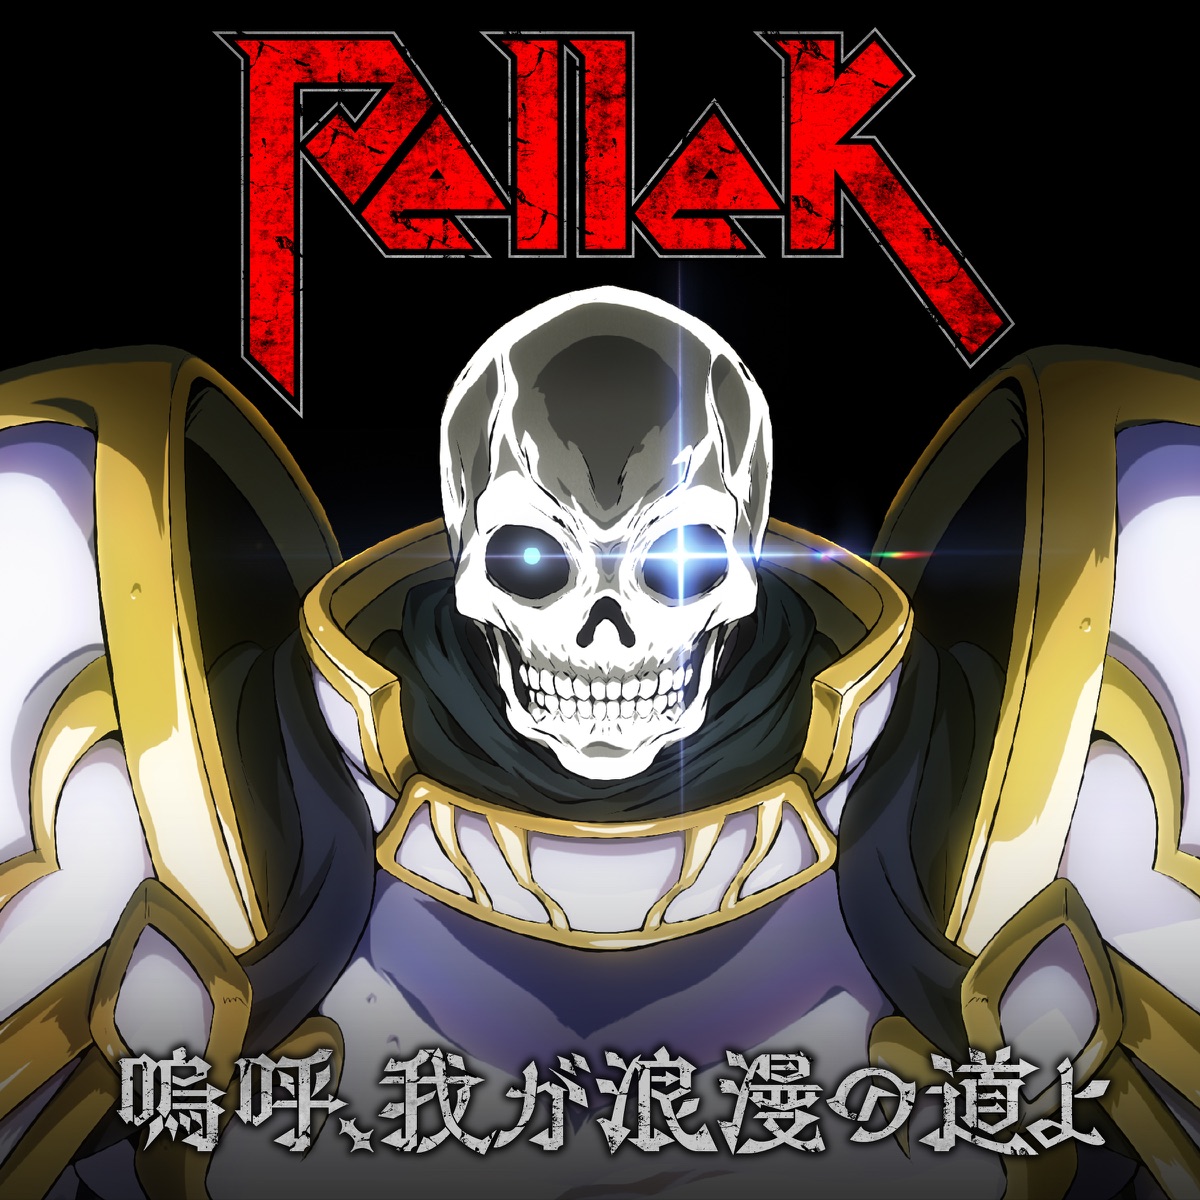 Pellek — Aa, Waga Rouman no Michi yo cover artwork